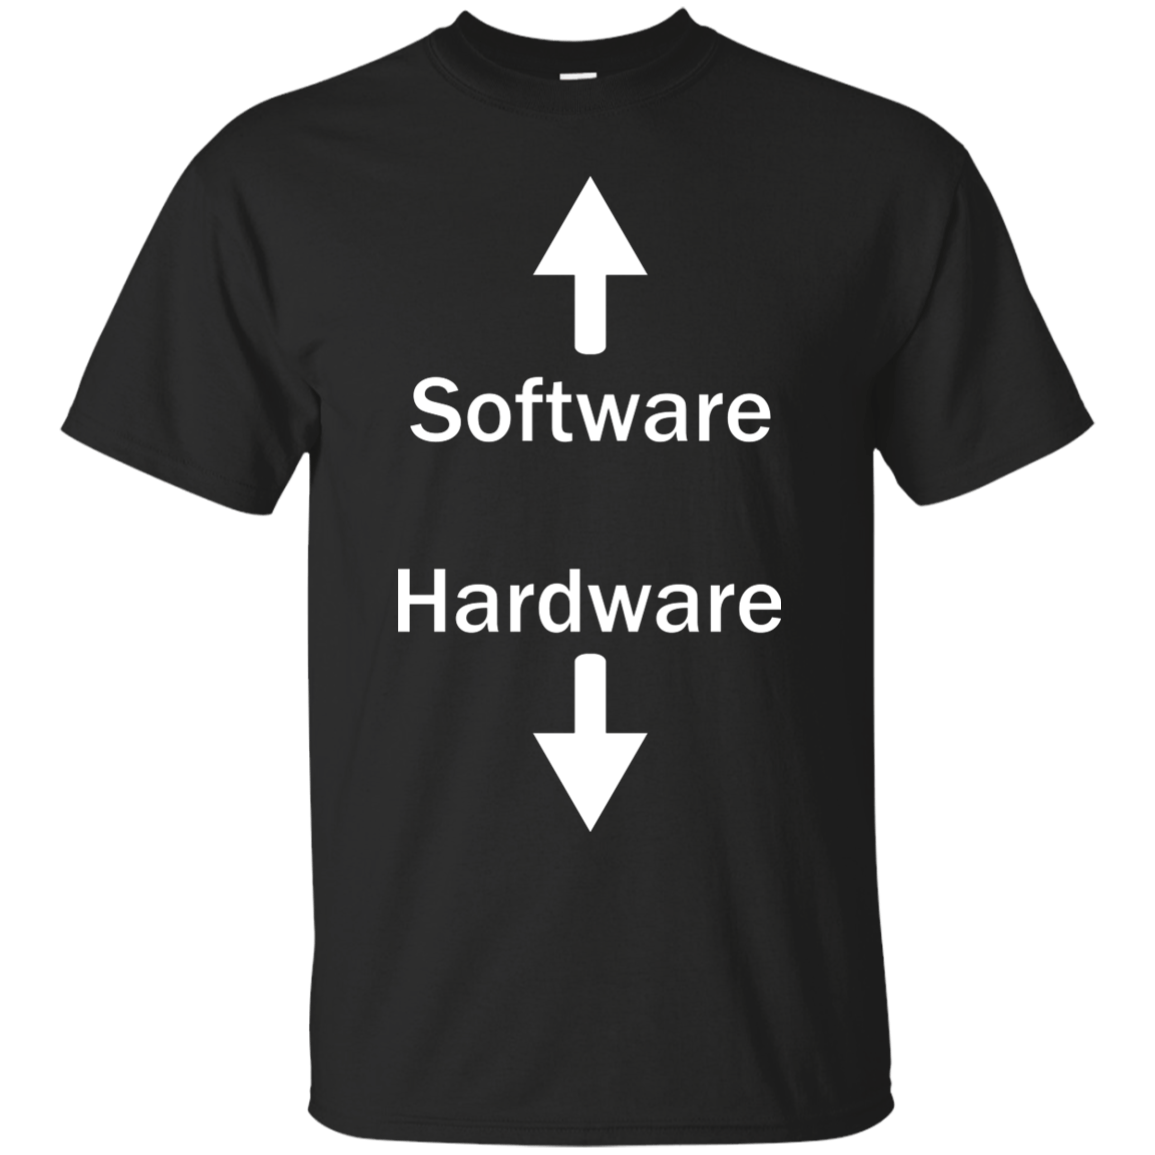 Software & Hardware